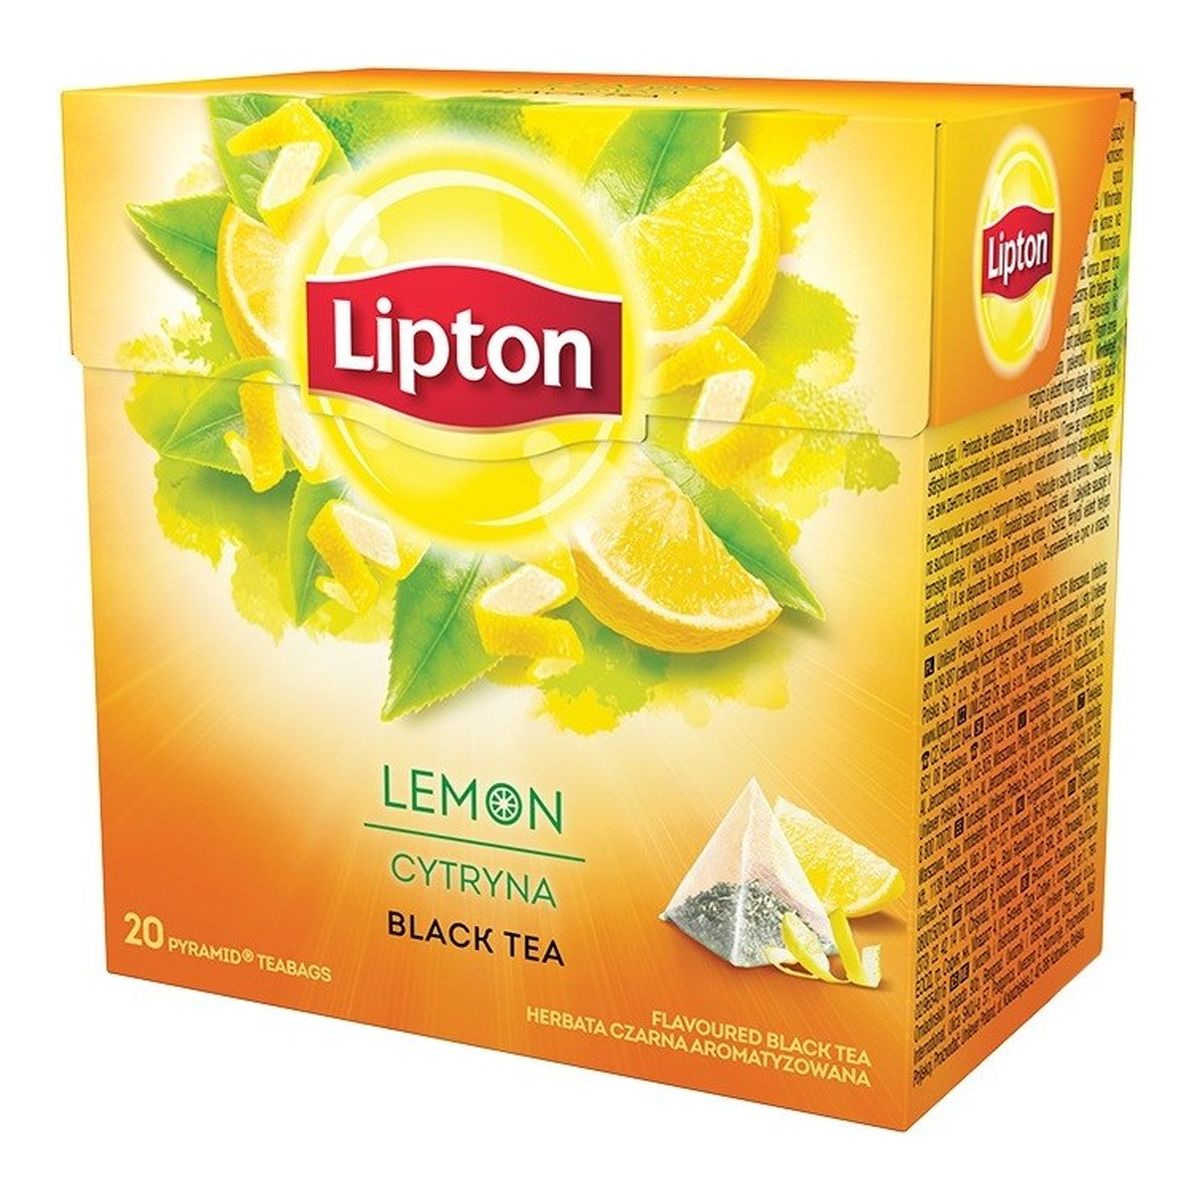 herbata czarna aromatyzowana Cytryna 20 piramidek